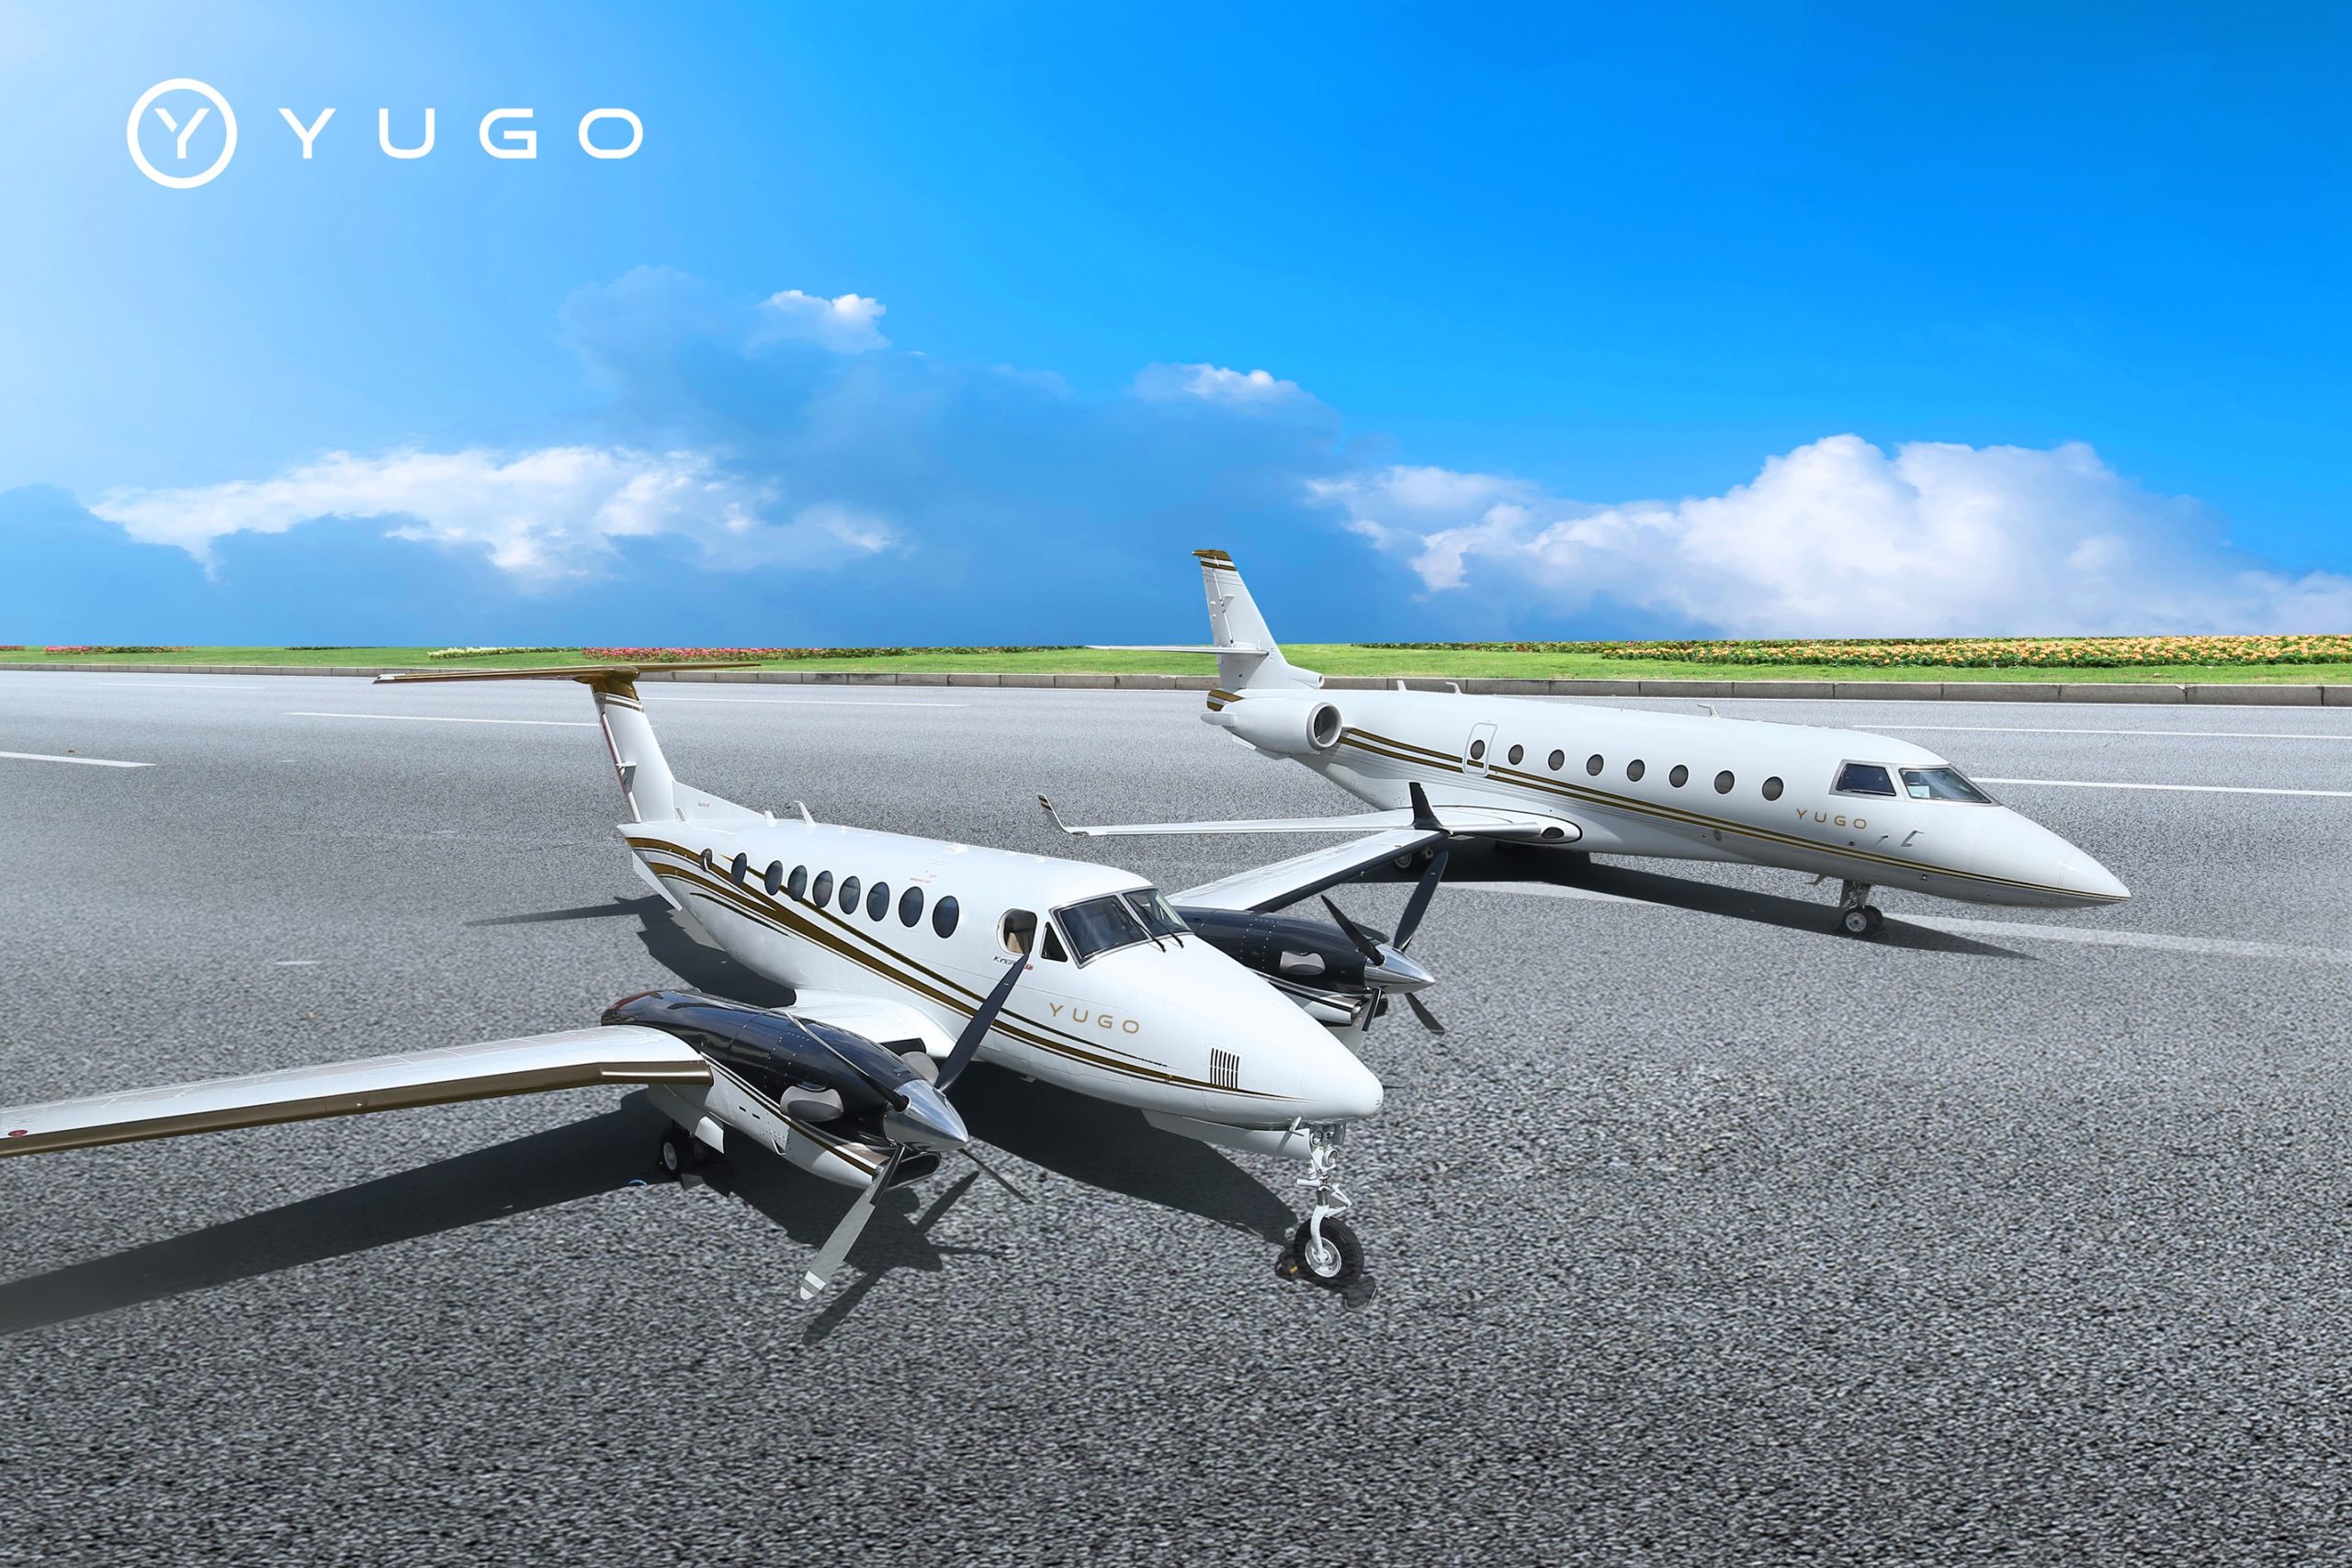 Yugo Private Aviation raises $300K to improve its digital ecosystem